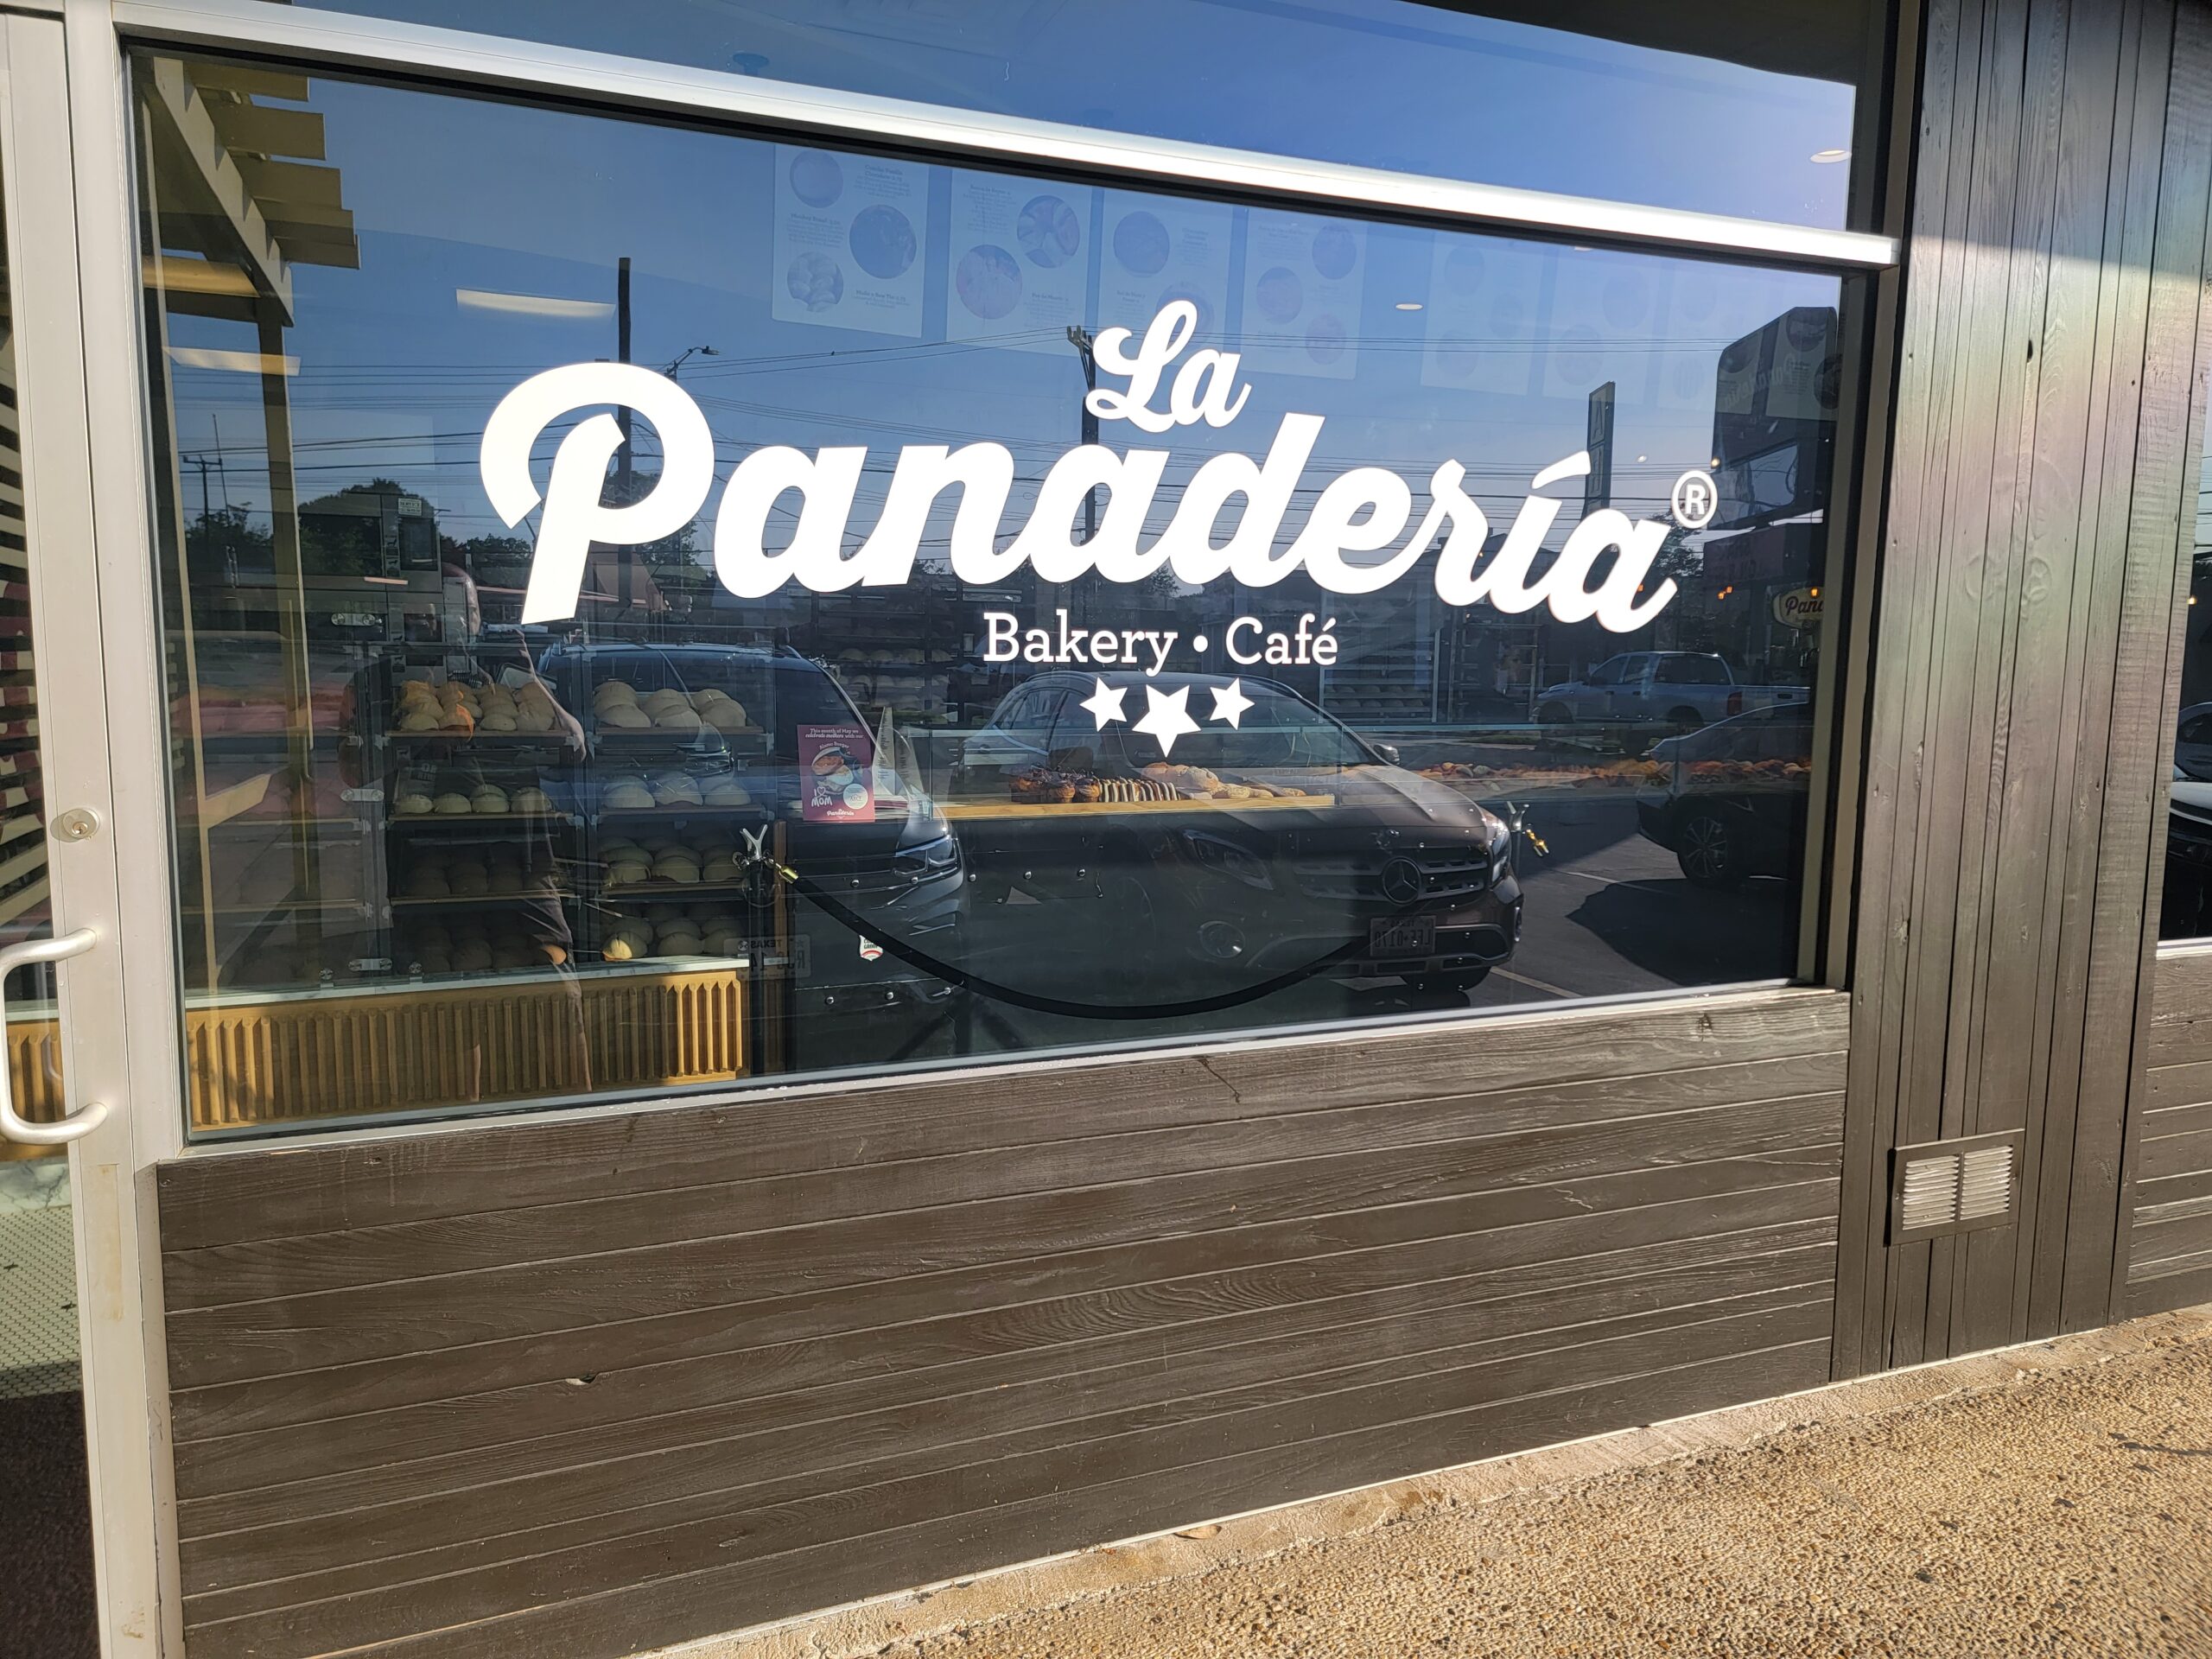 La Panaderia Tint and Graphics